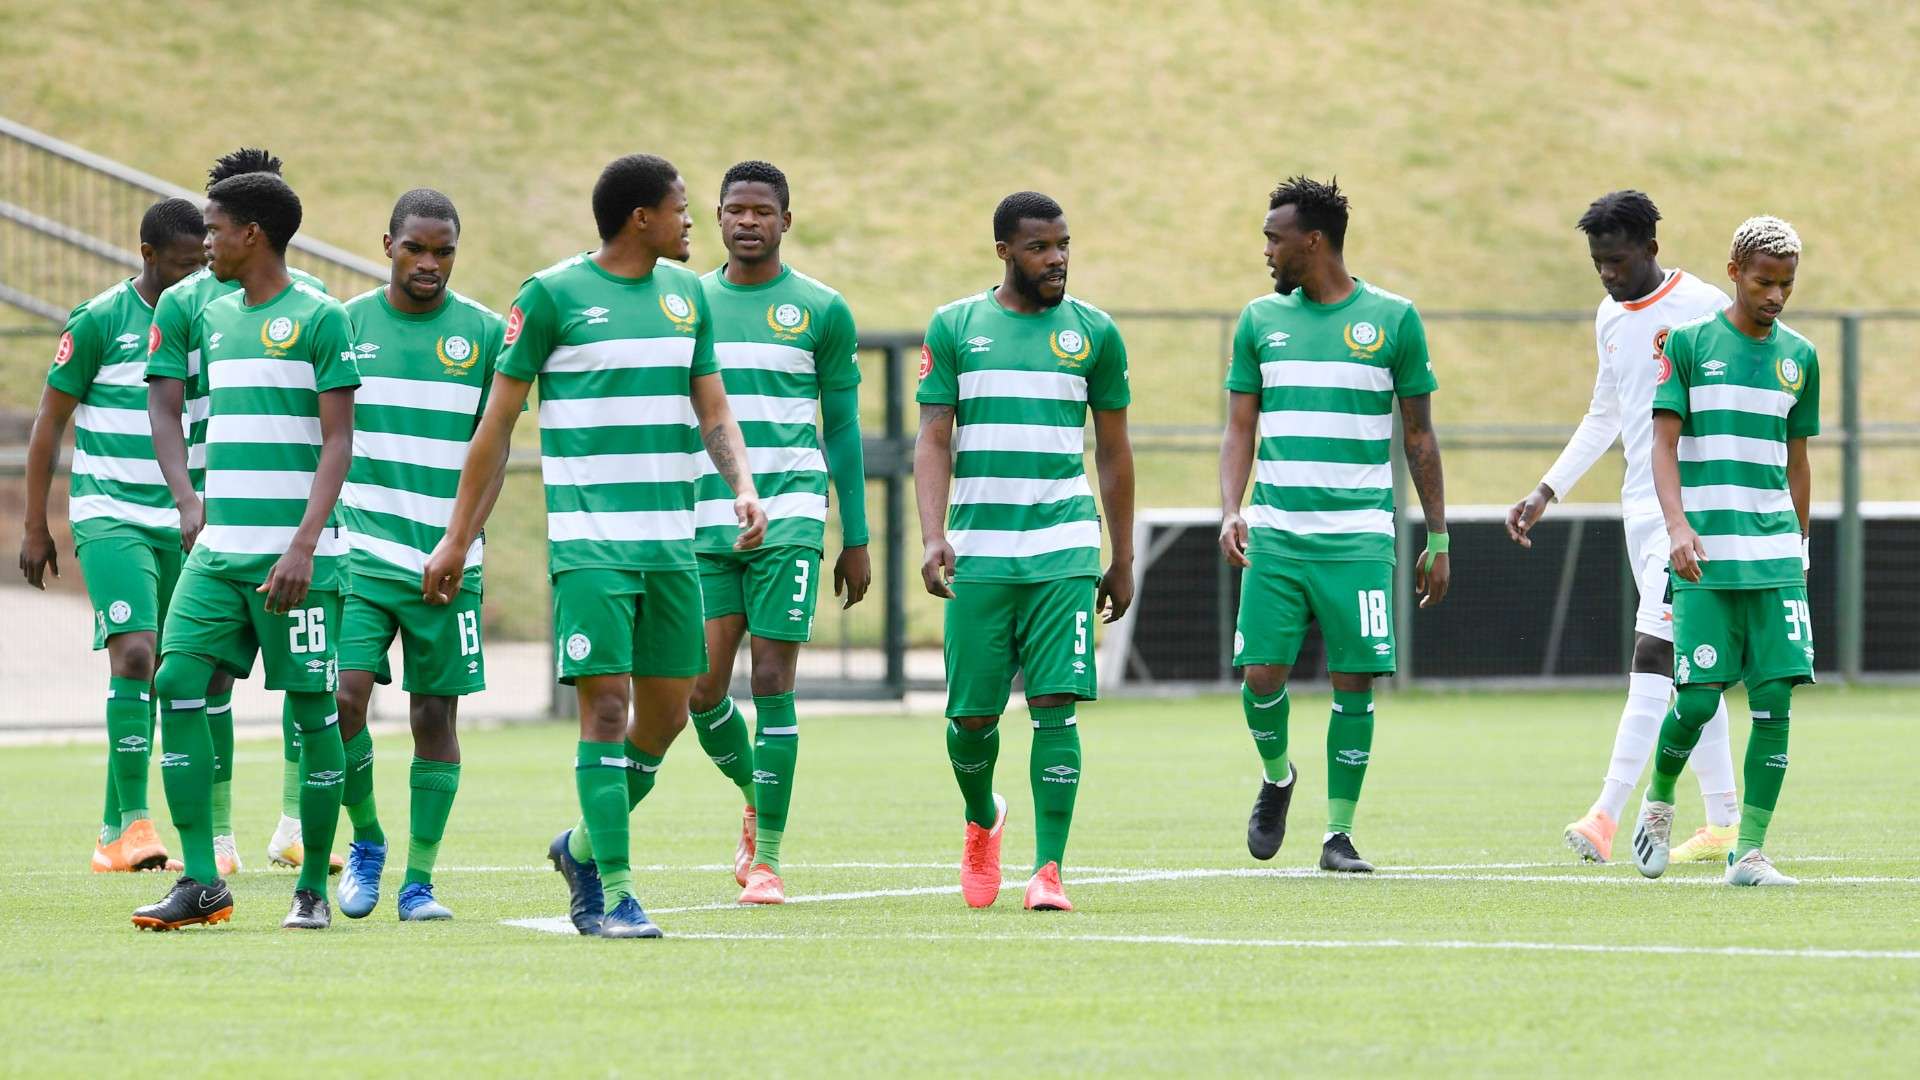 Bloemfontein Celtic players, August 2020